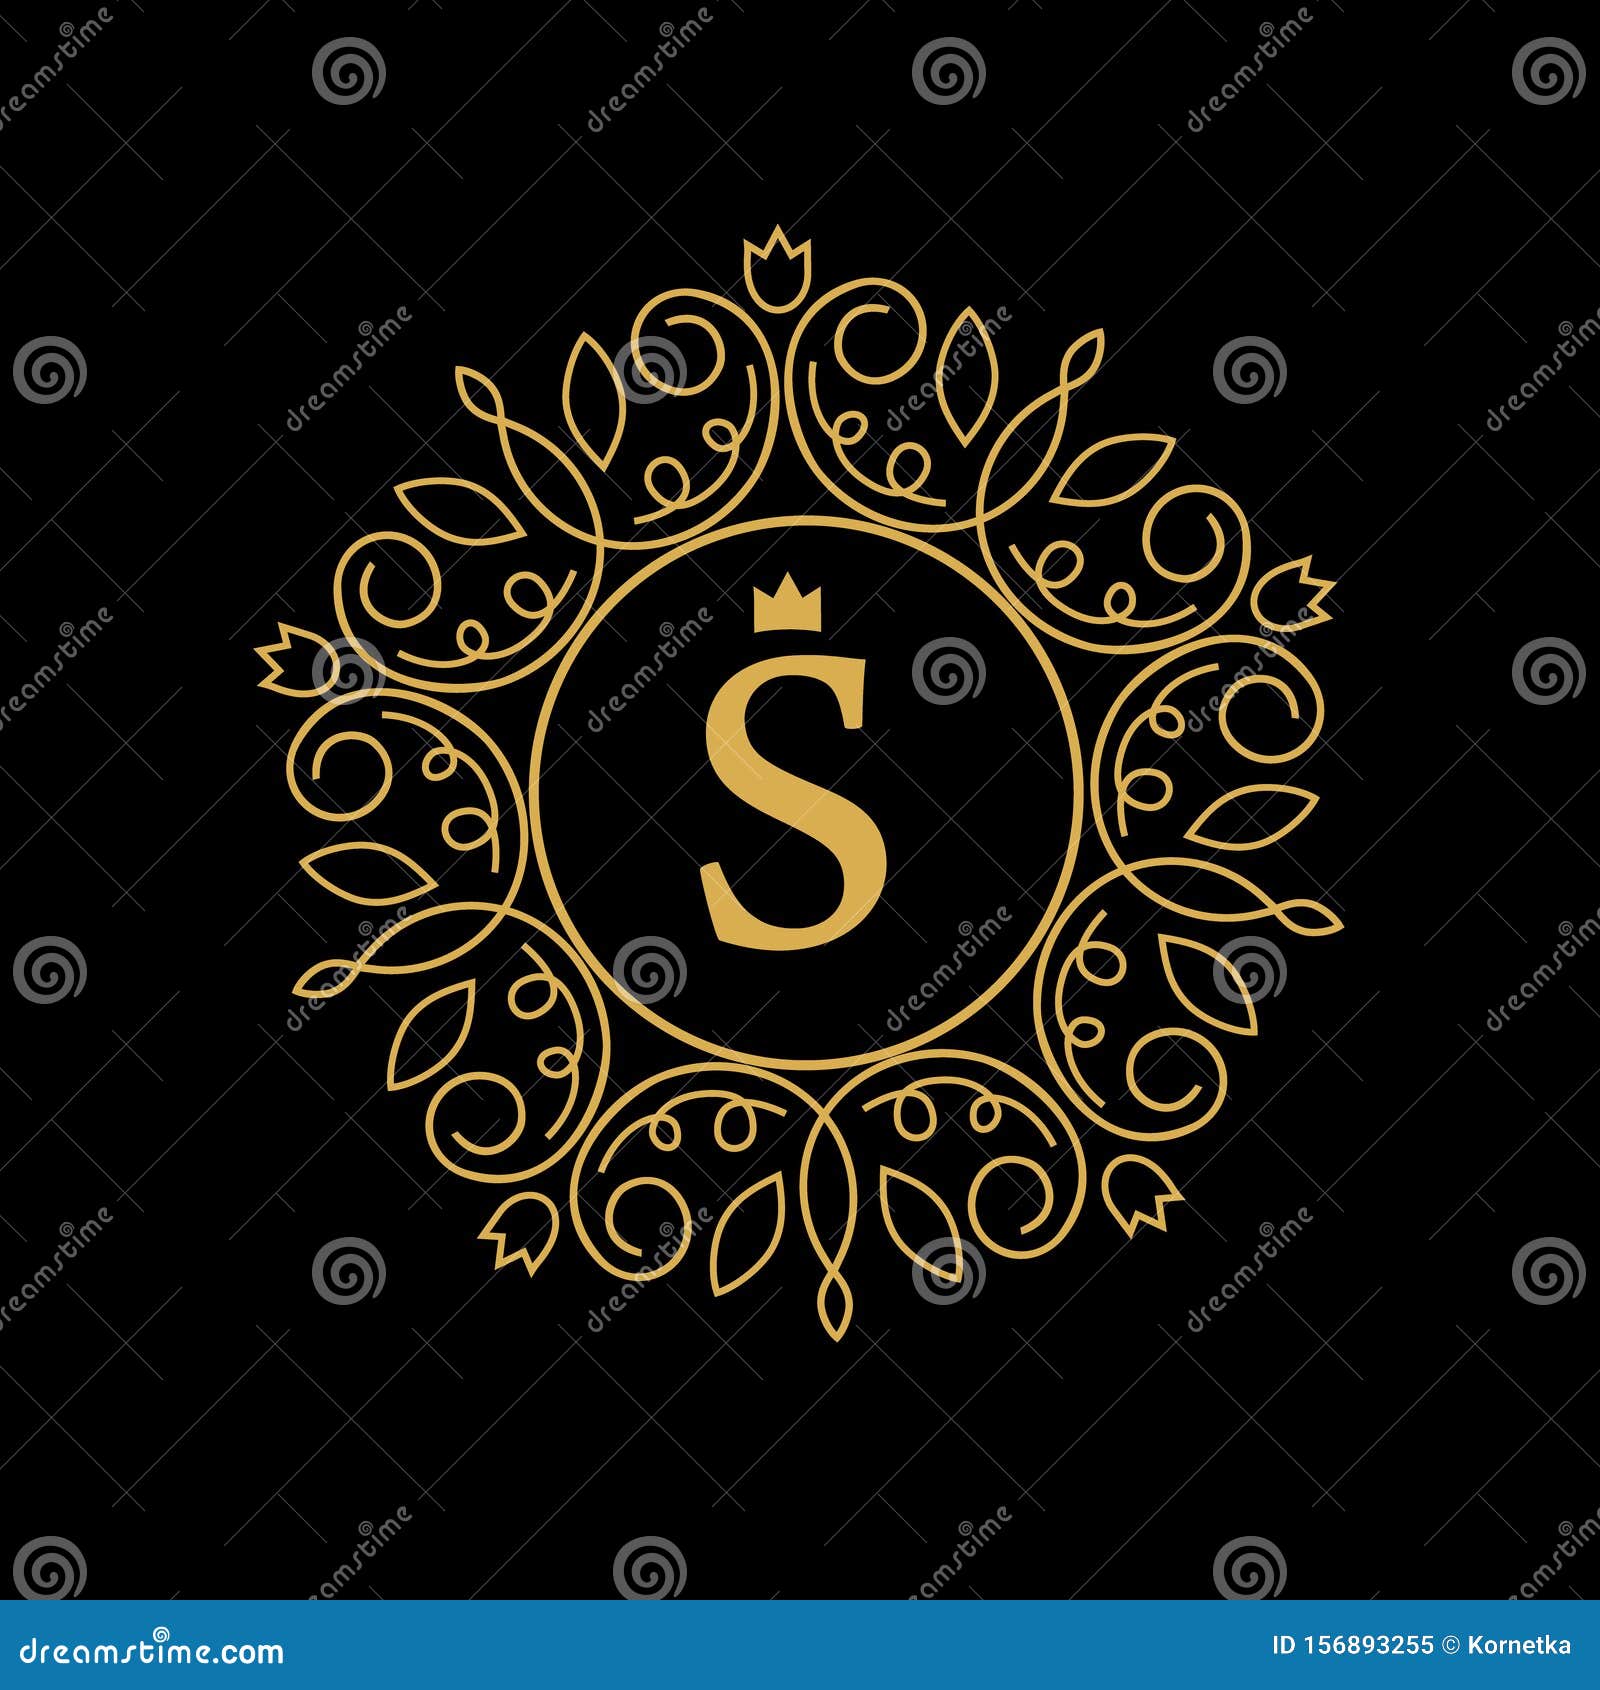 Round Emblem with the Gold Letter S on Black Background. Elegant Floral ...